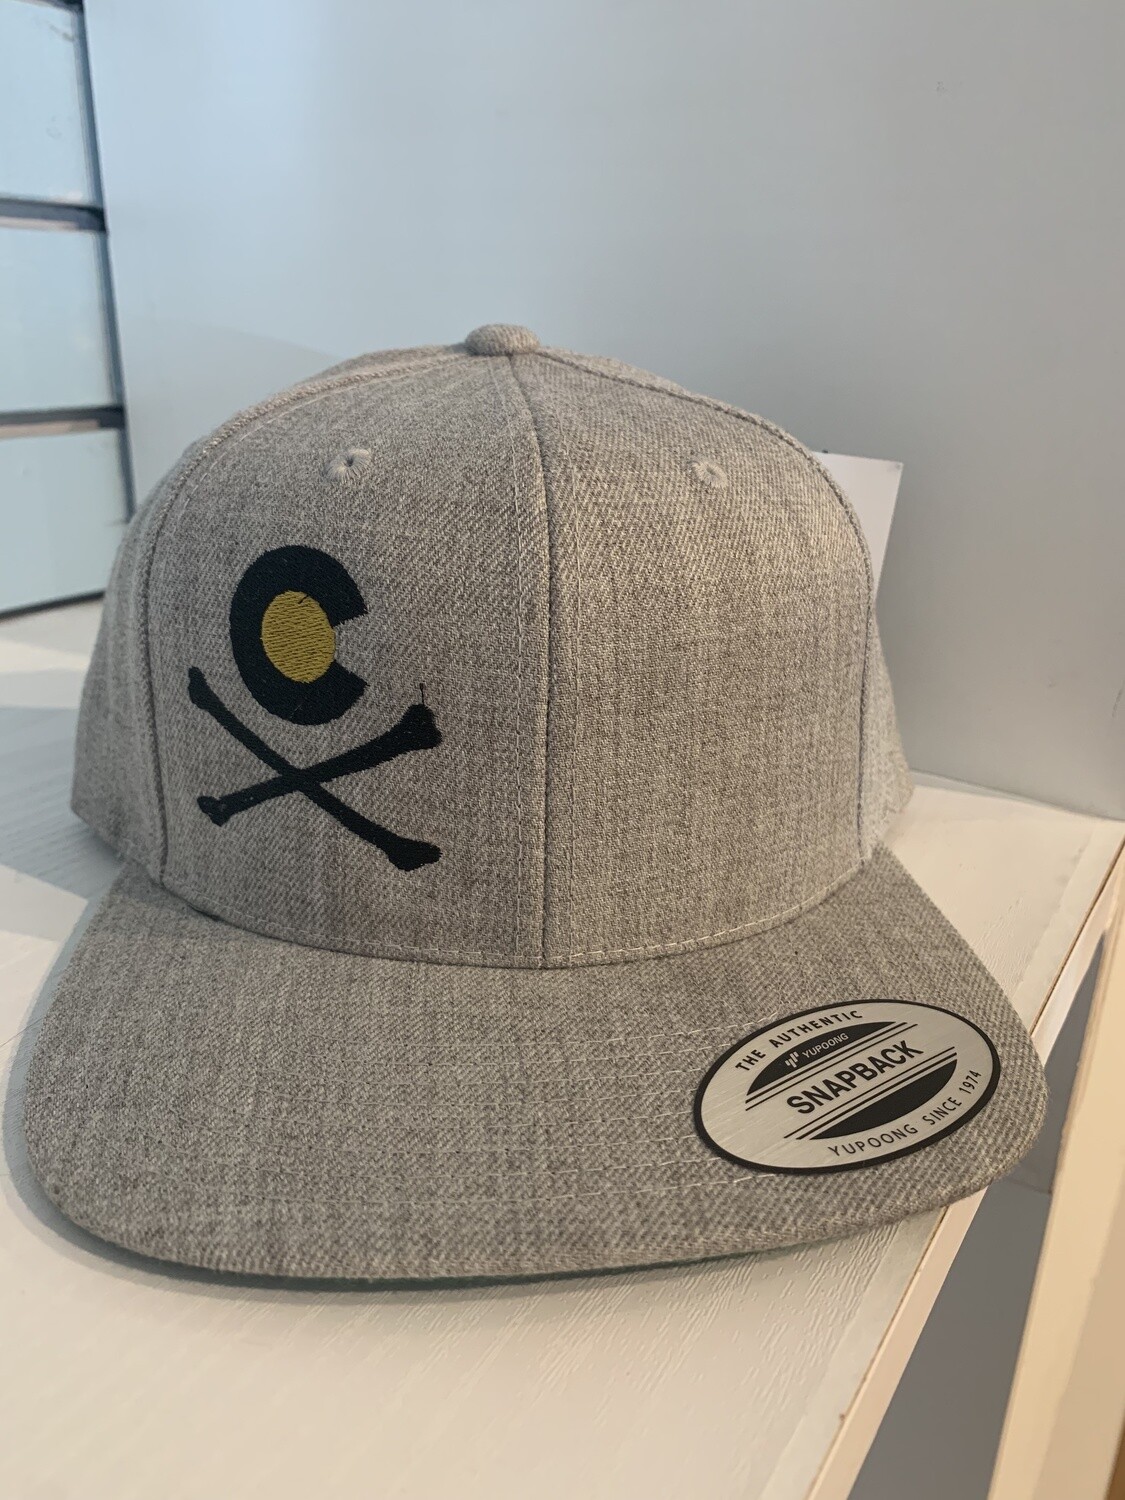 CO Crossbones Baseball Hat